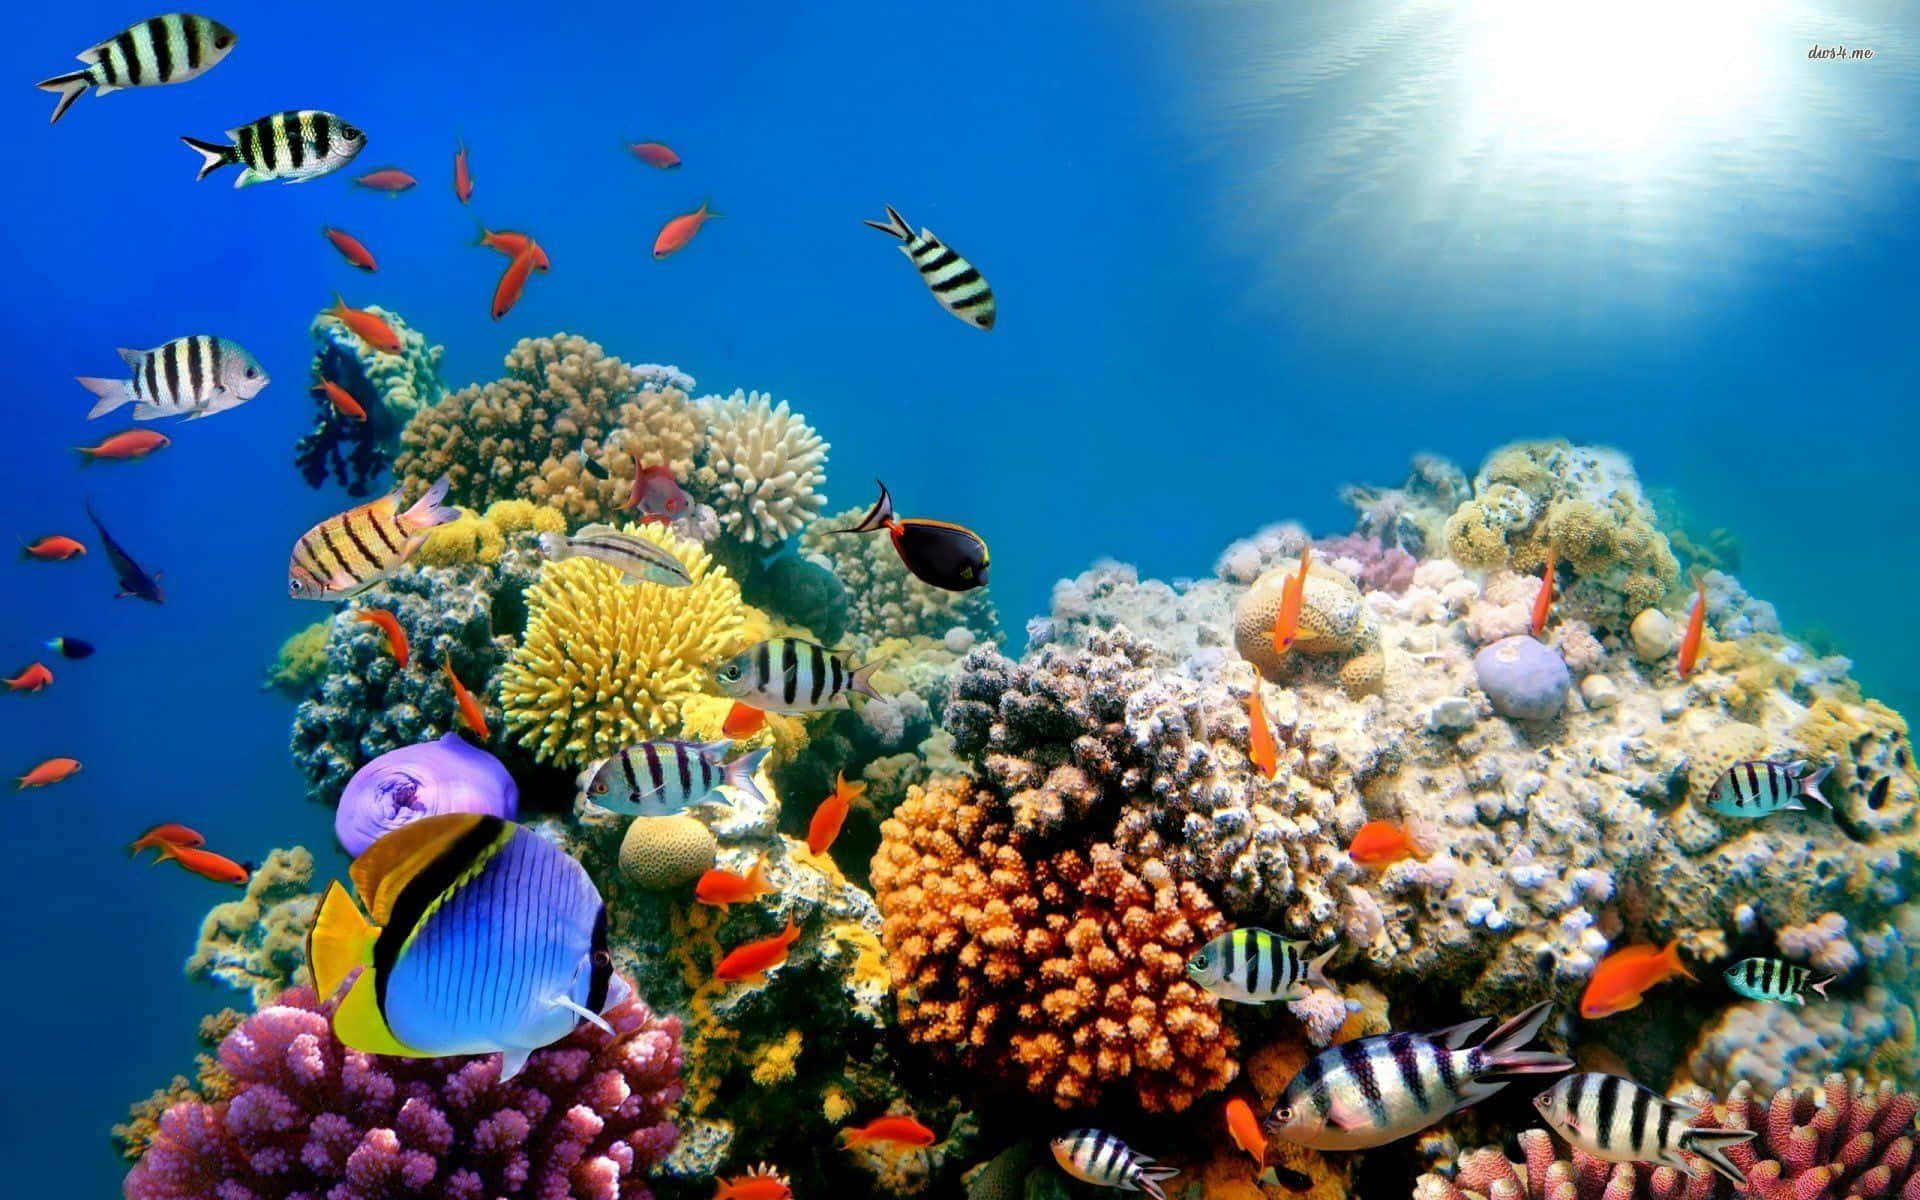 Explore the depths of the Underwater Ocean